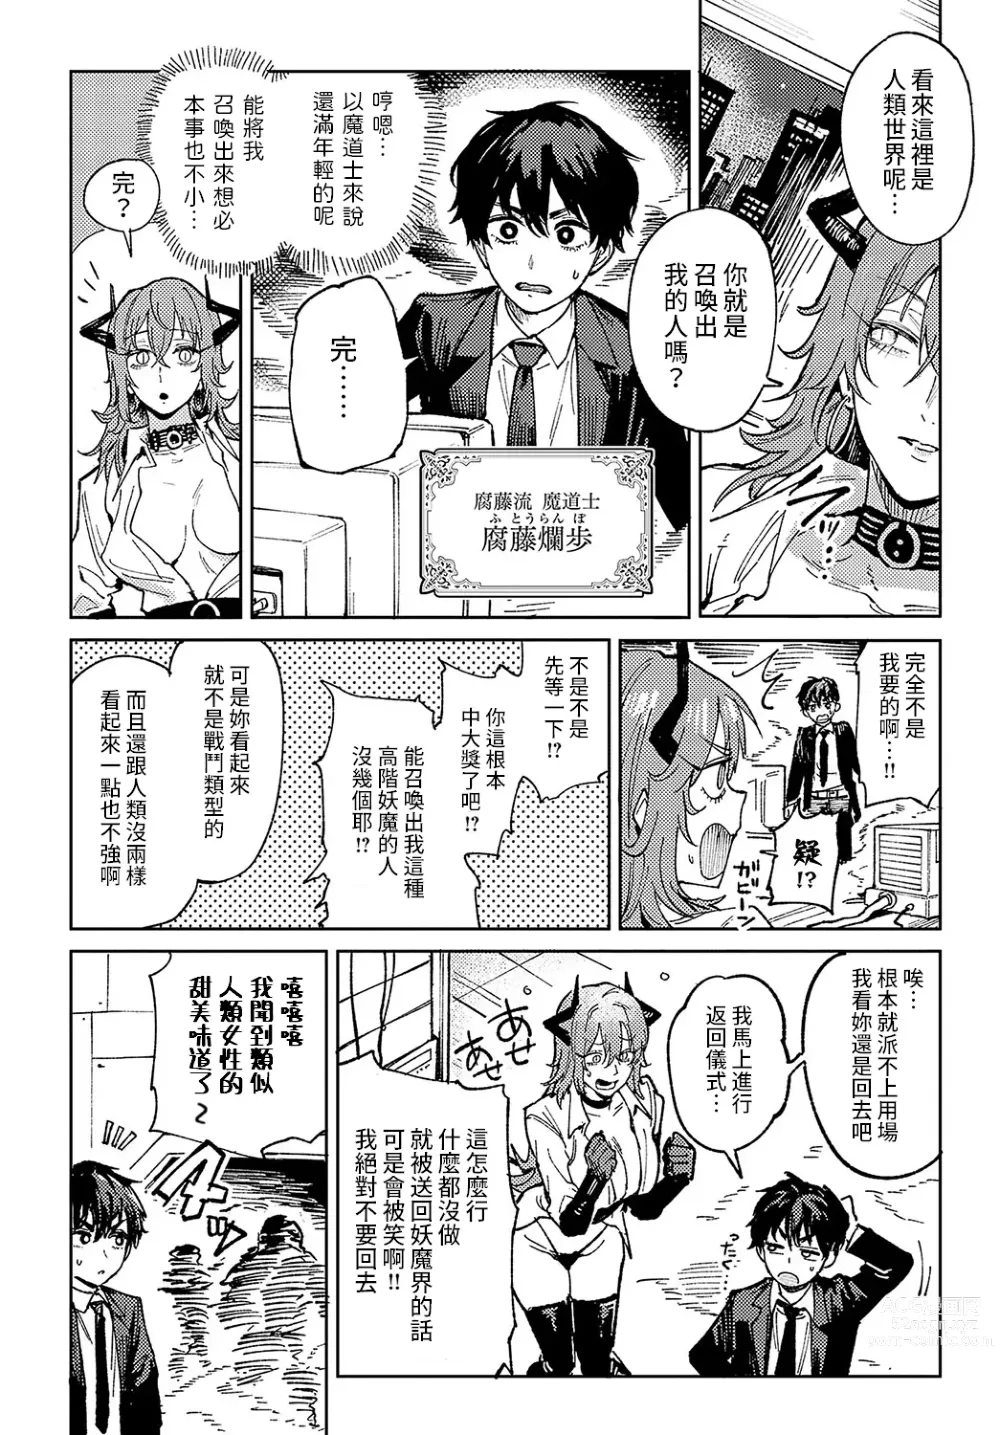 Page 2 of manga Youran Makou